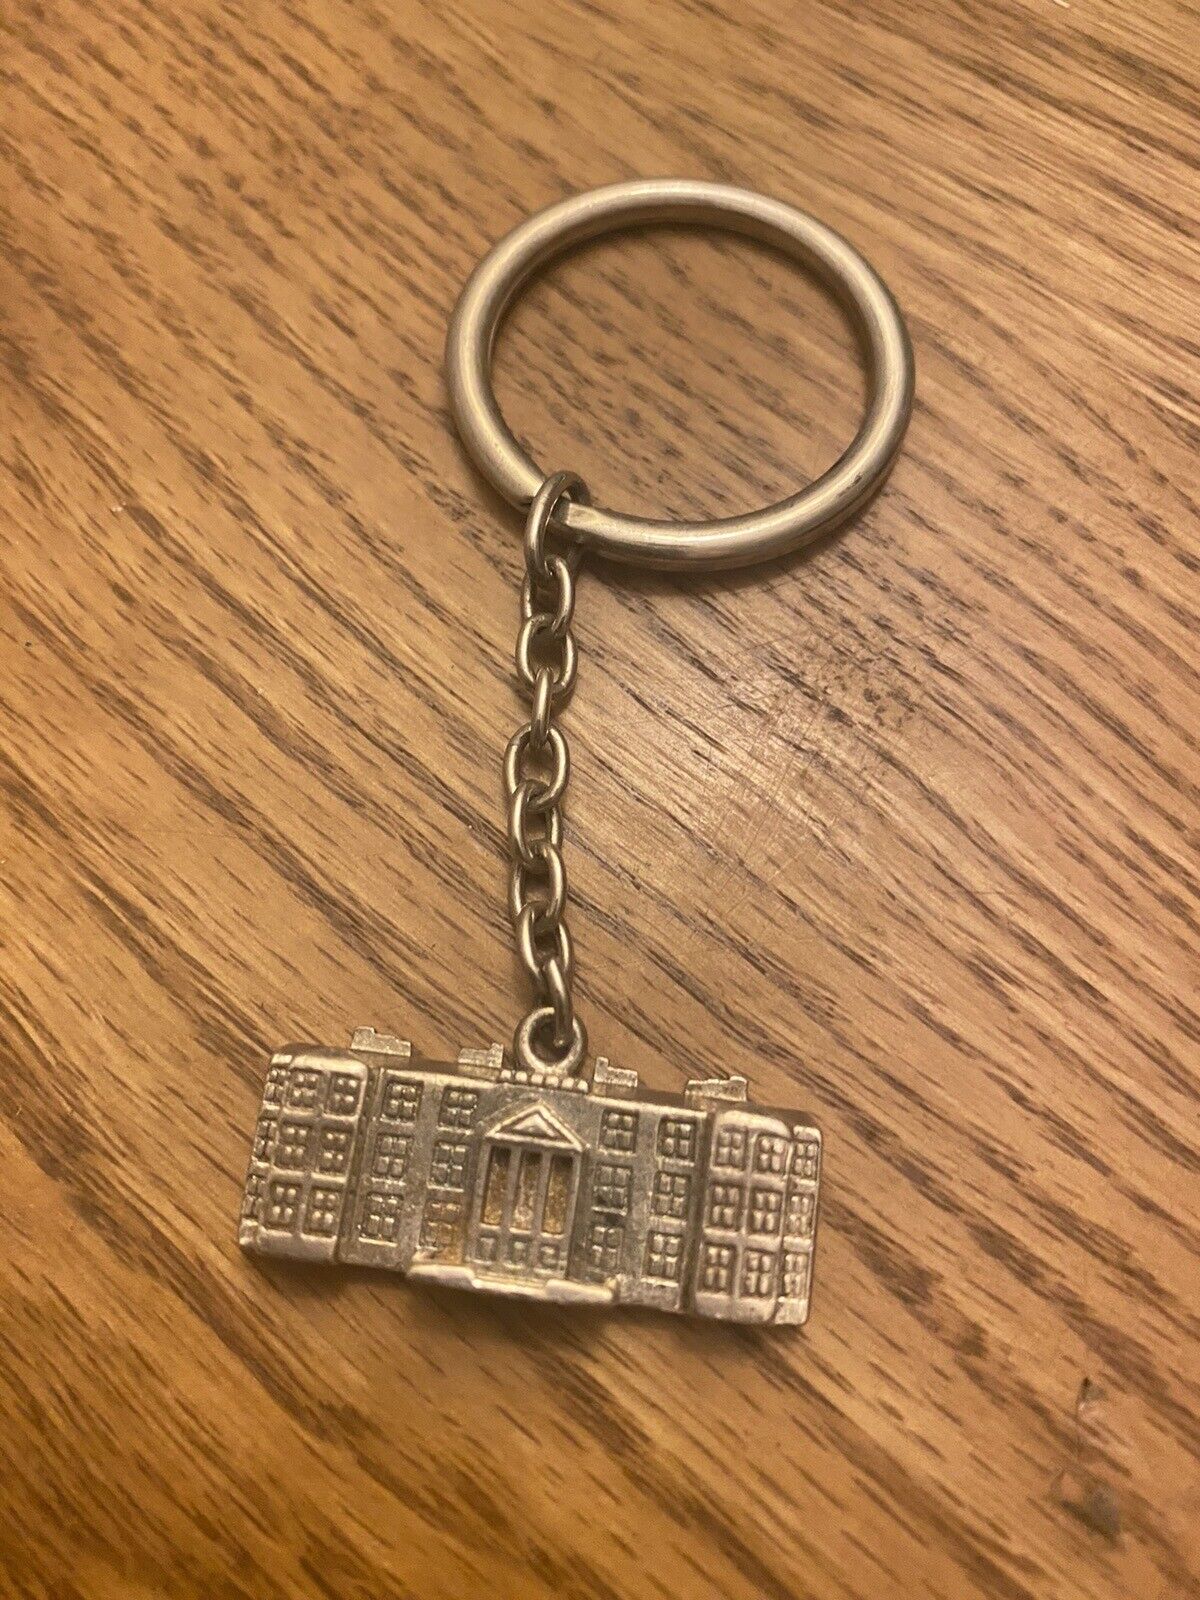 Lanesborough Luxury Hotel of England Solid Sterling Key Ring Souvenir Piece